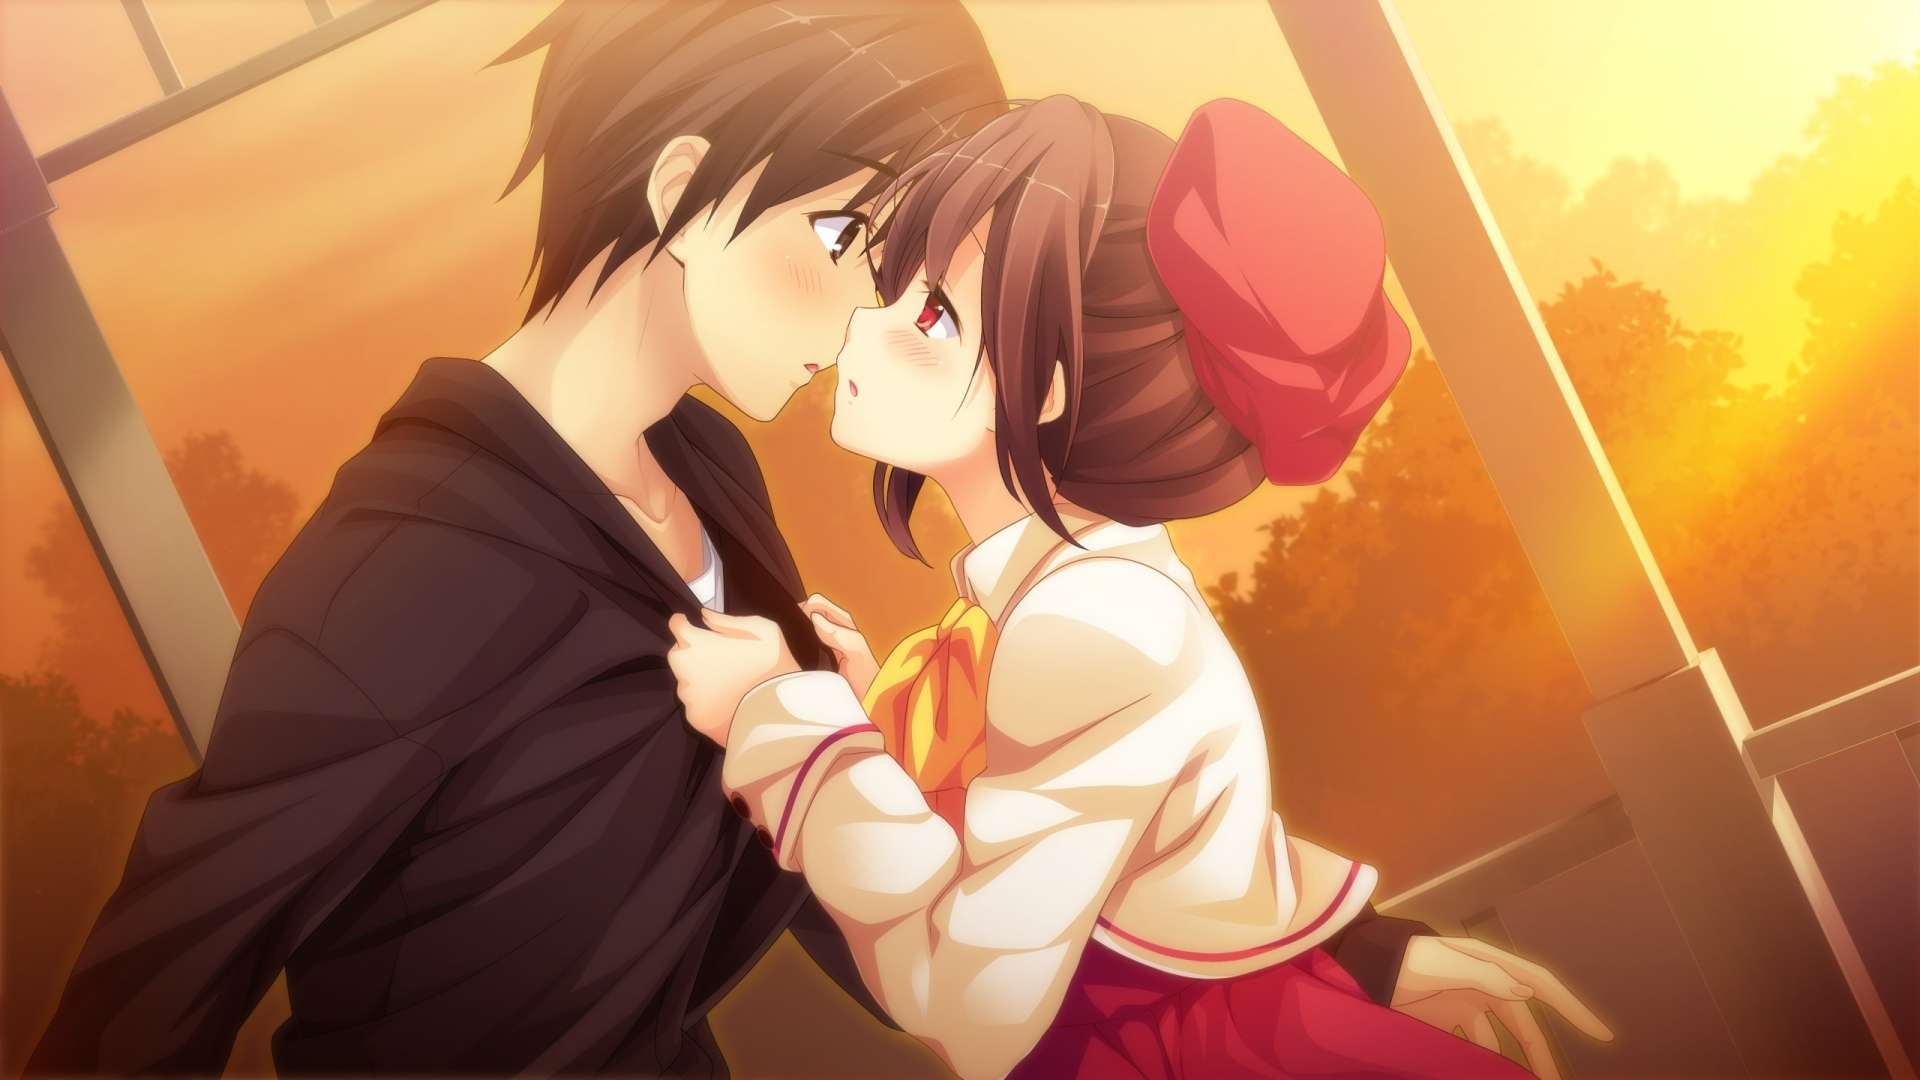 Anime Romantic Image Wallpaper HD Free Download